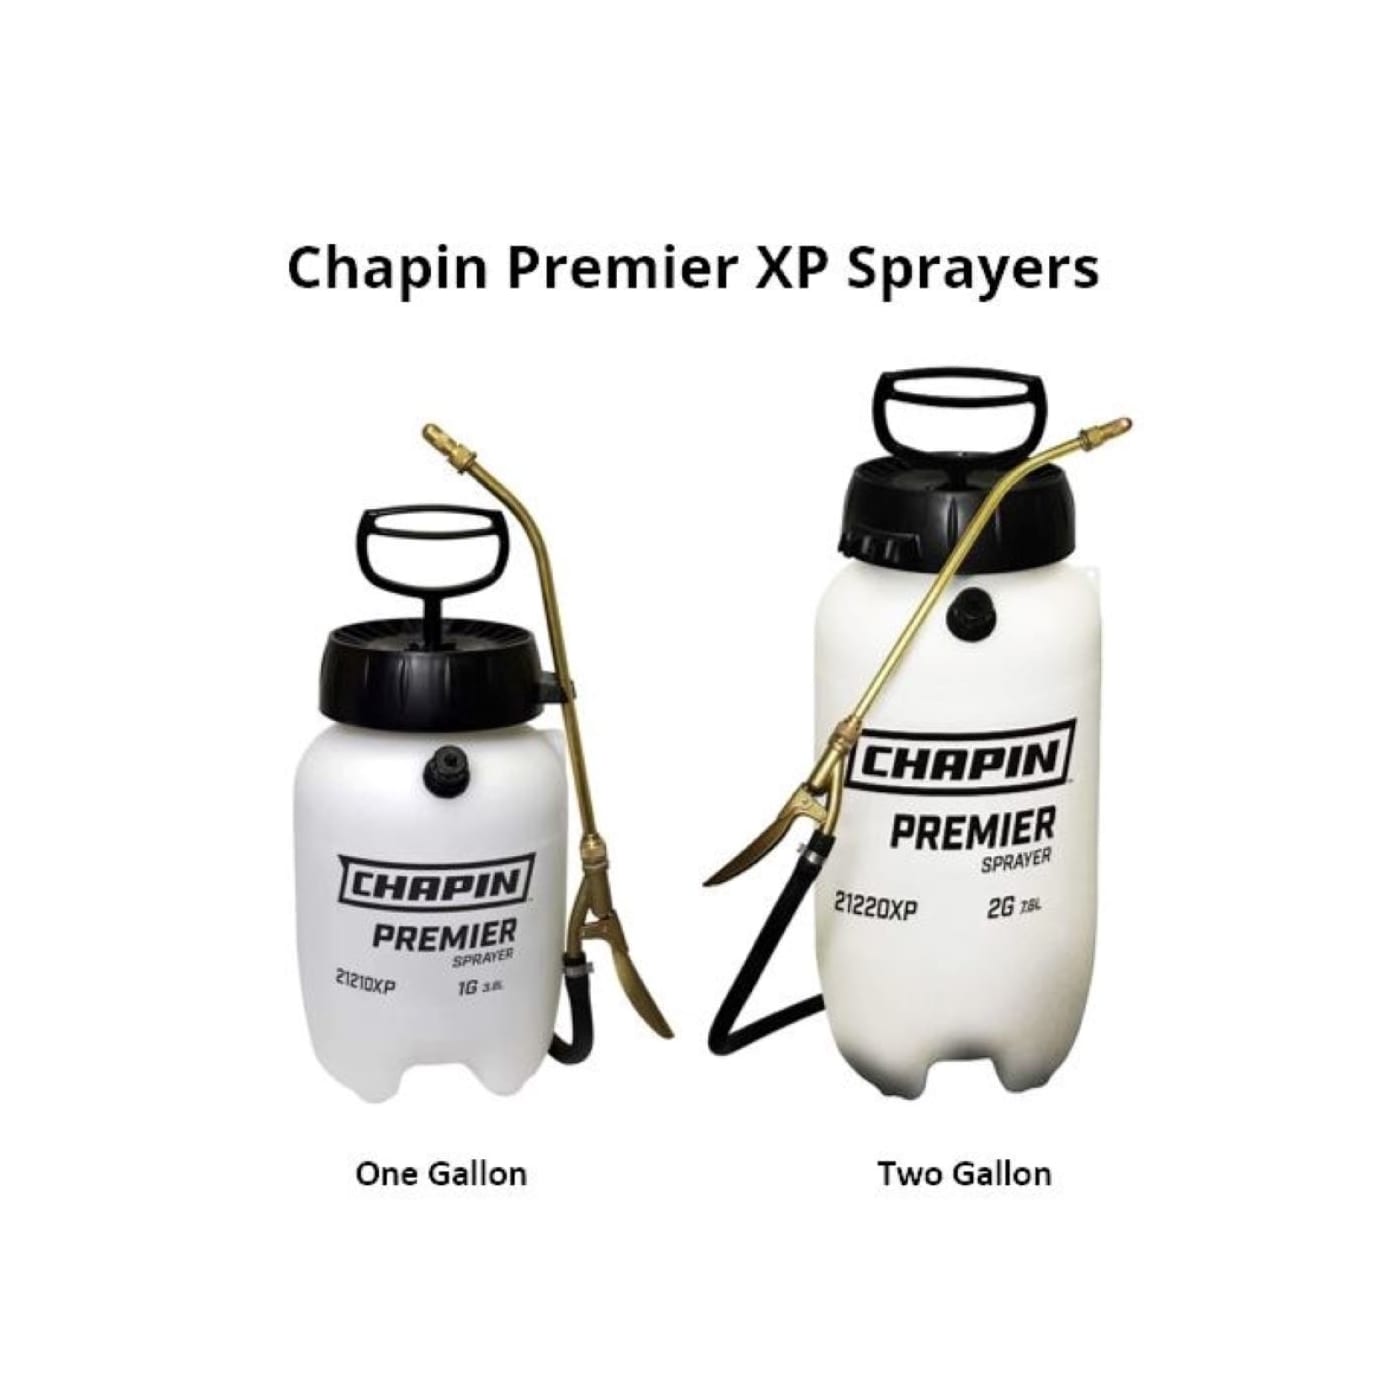 Chapin Foam Sprayer